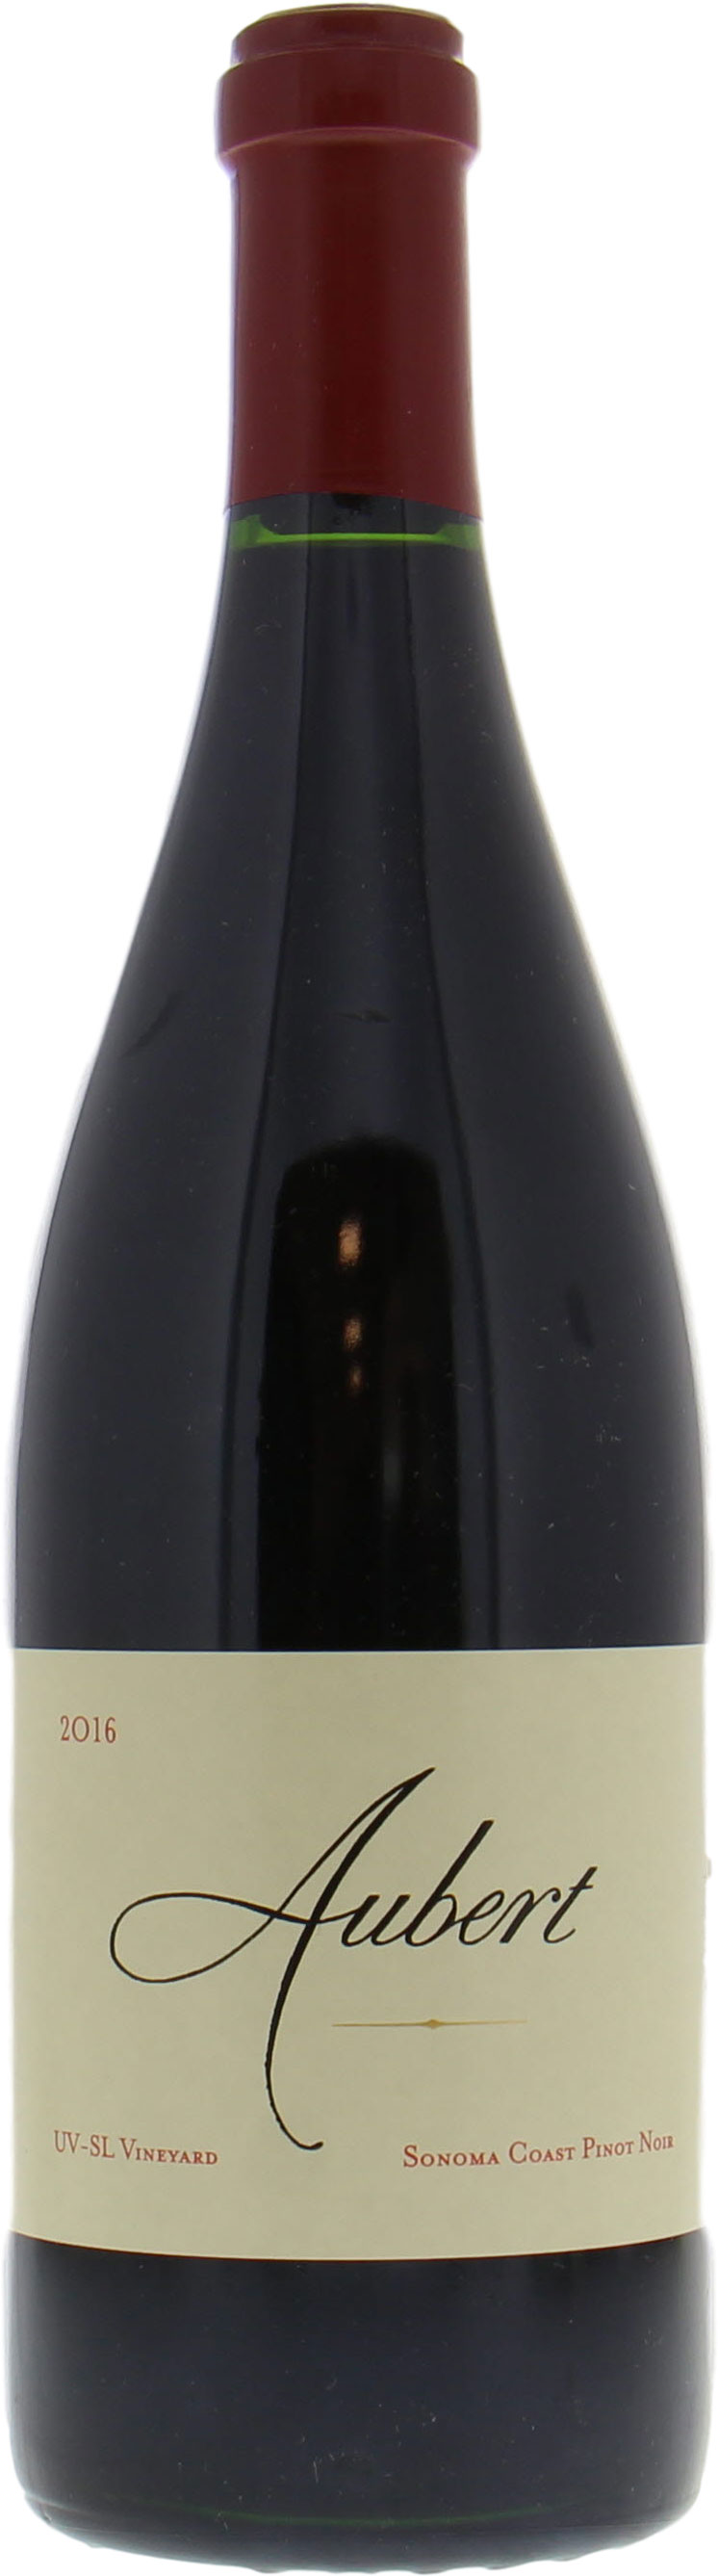 Aubert - UV-SL Pinot Noir 2016